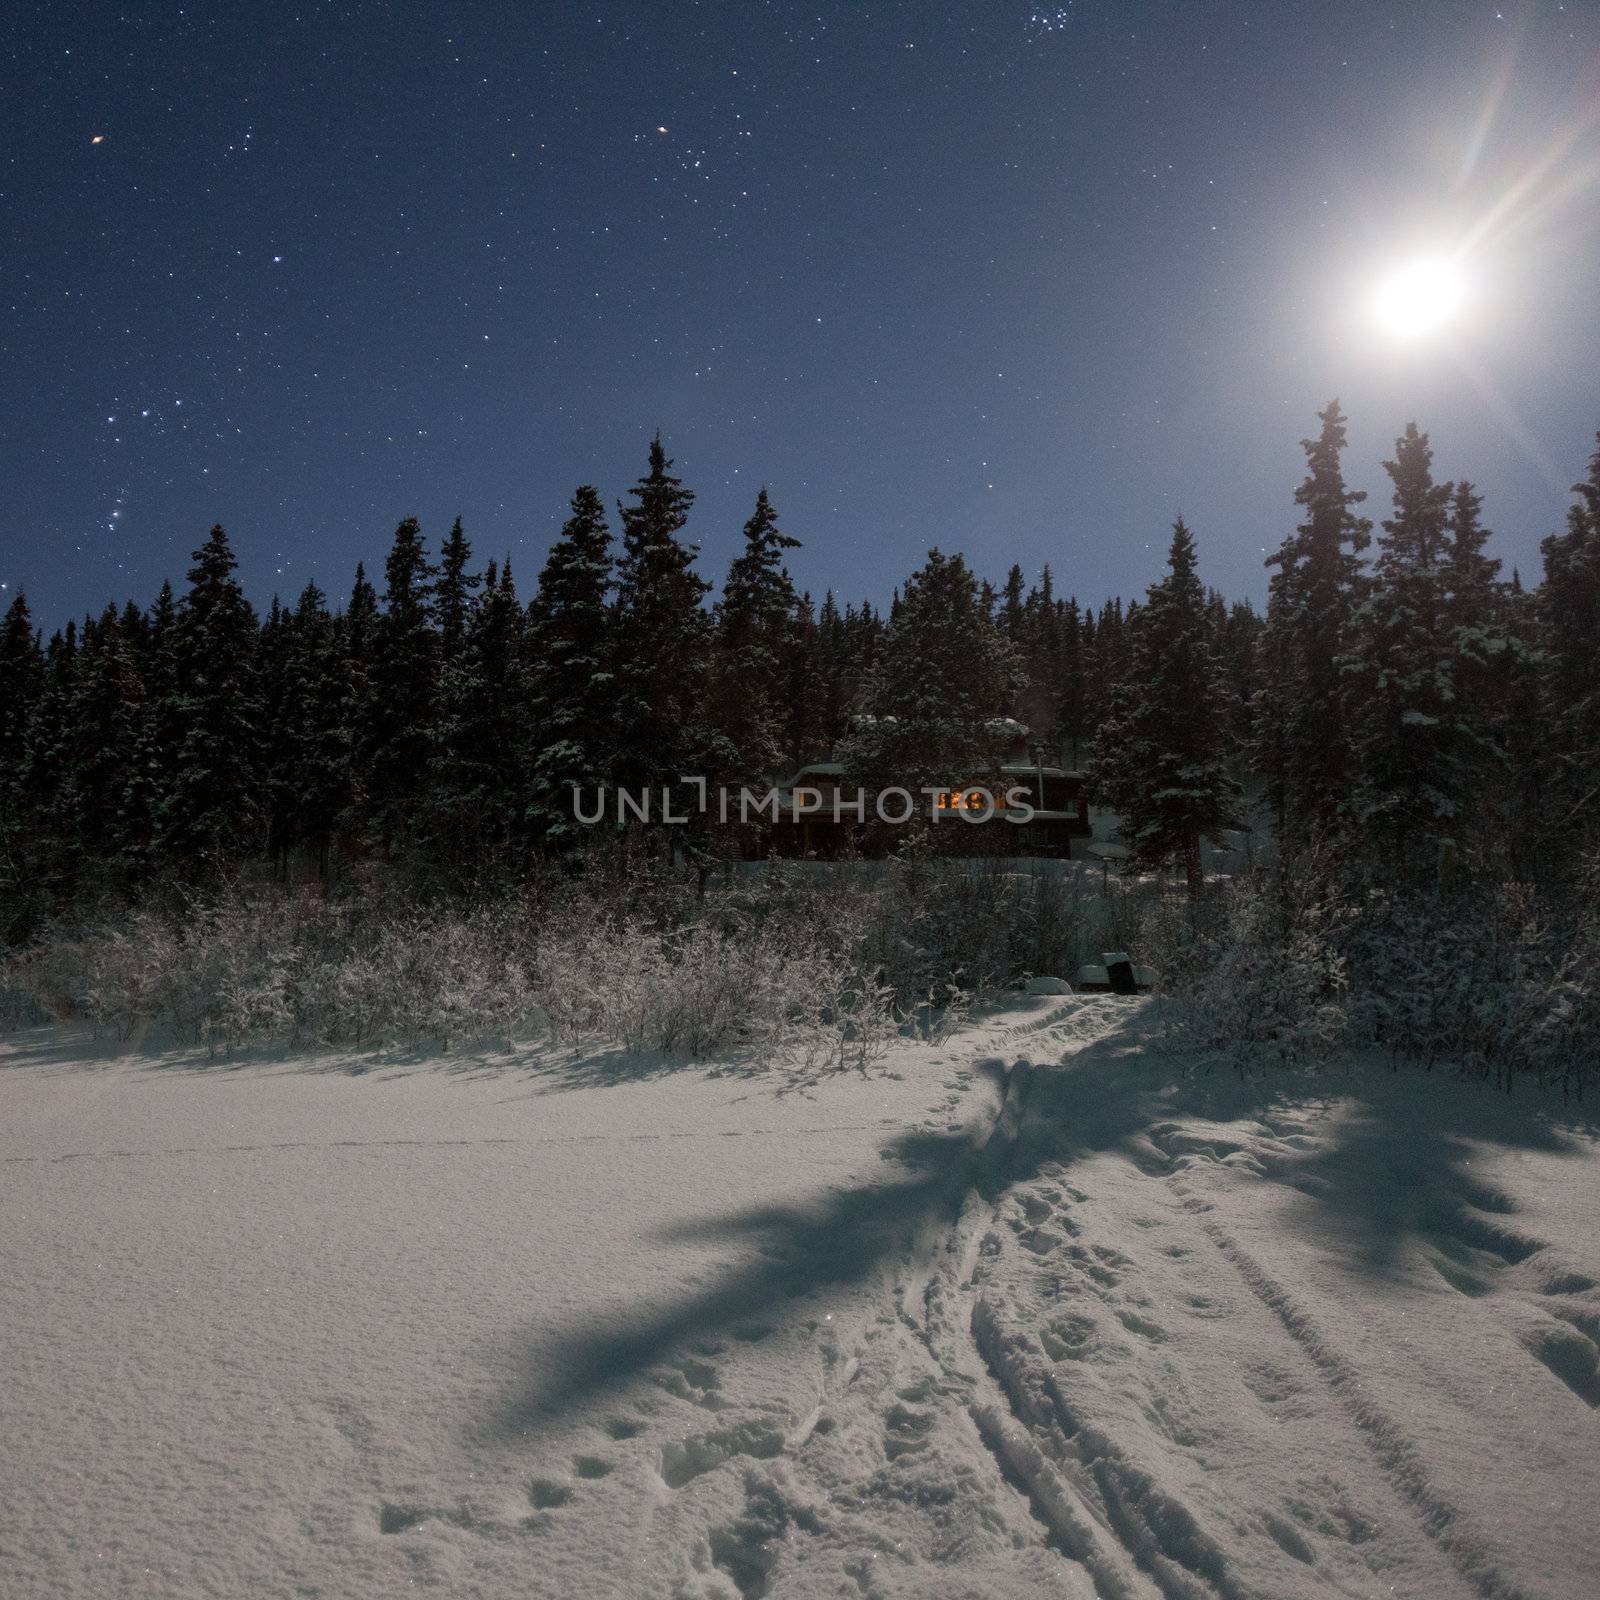 Cottage in moon lit winter wonderland by PiLens